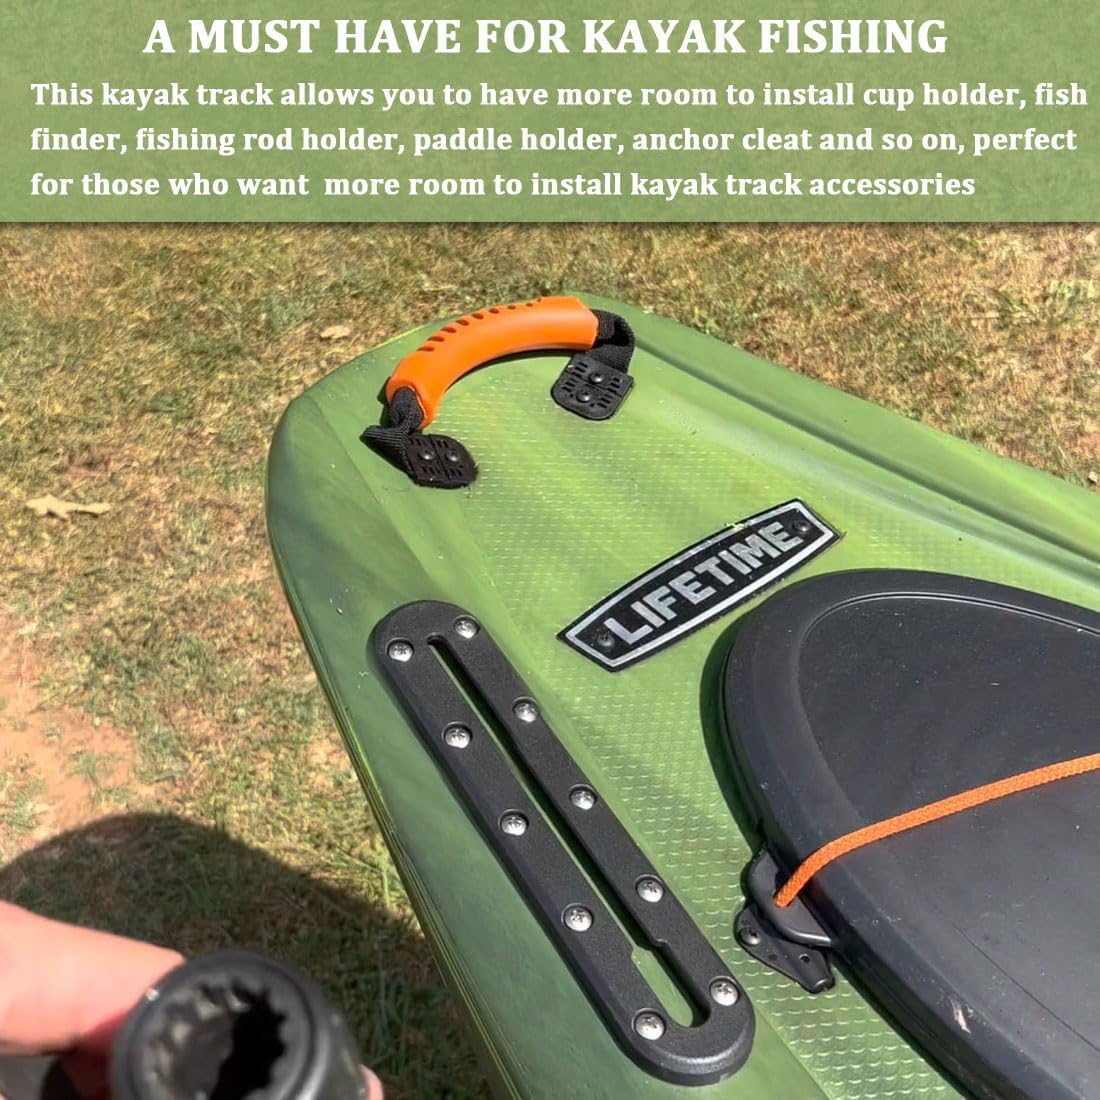 Huntury Kayak Track, Kayak Low Profile Track, Kayak Rail, Kayak Accessories Mount Track, Kayak Gear Track for Fishing Rod Holder, Fish Fider, Cup Holder, Gopro, Pack of 2